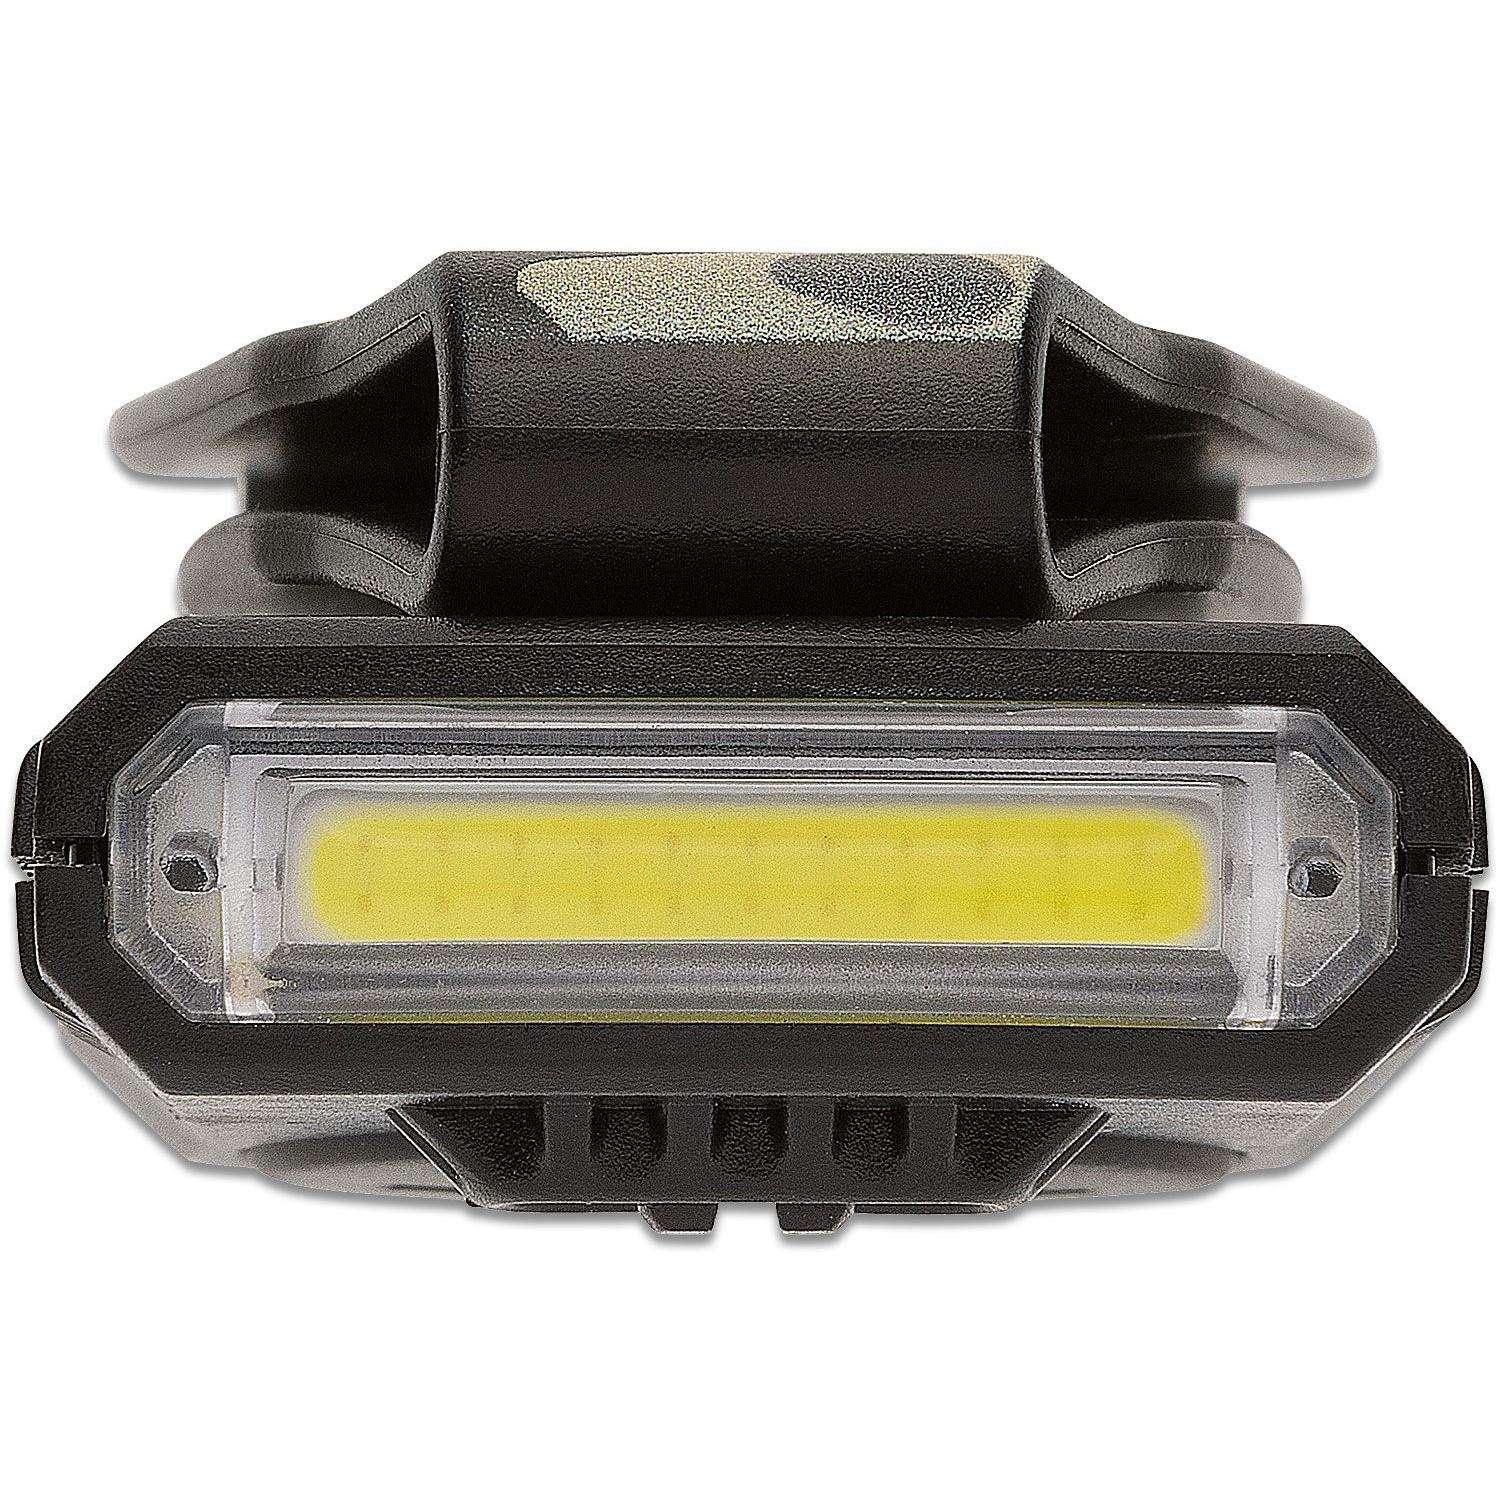 BG NIGHT SEEKER 2 OVIX CAP LIGHT USB RECHAGABLE WHTE/GRN